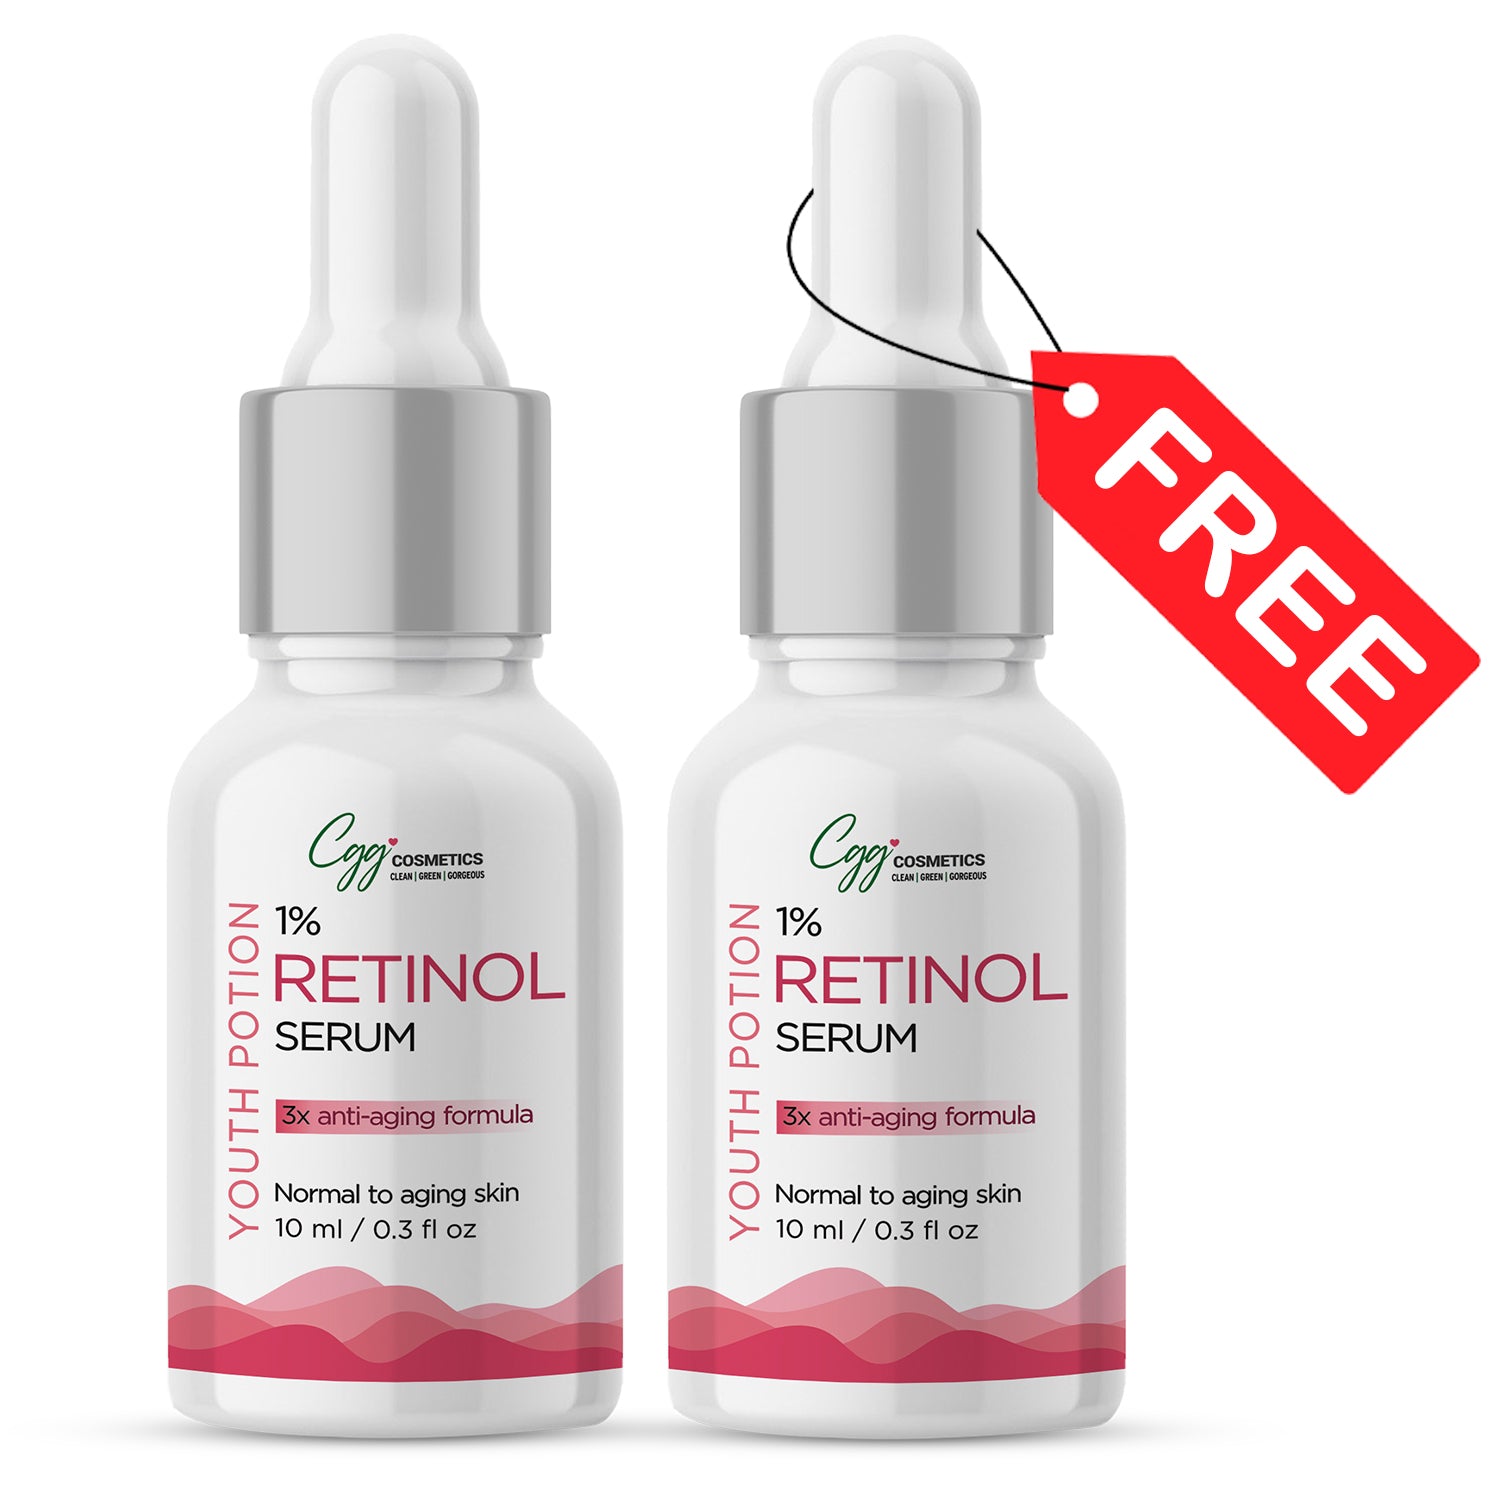 CGG Cosmetics 1% Retinol Serum 10ml & GET FREE 10ml 1% Retinol Serum - 3X Anti-Aging Formula